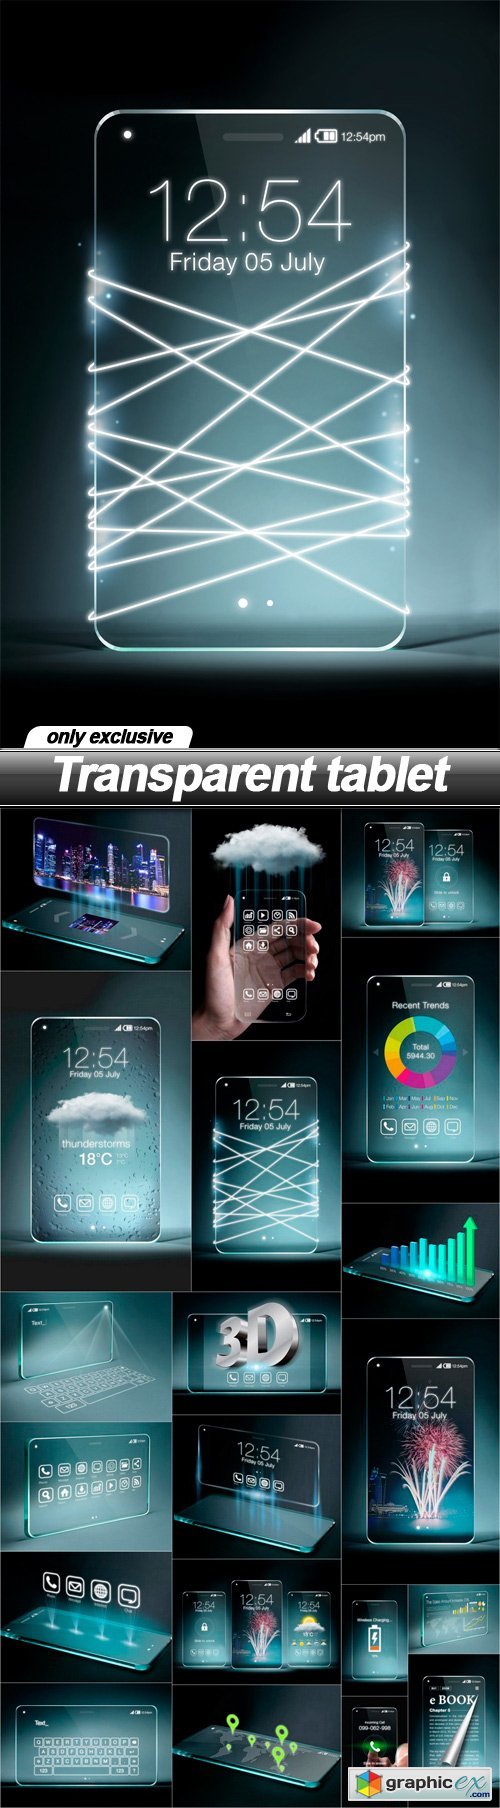 Transparent tablet - 20 UHQ JPEG